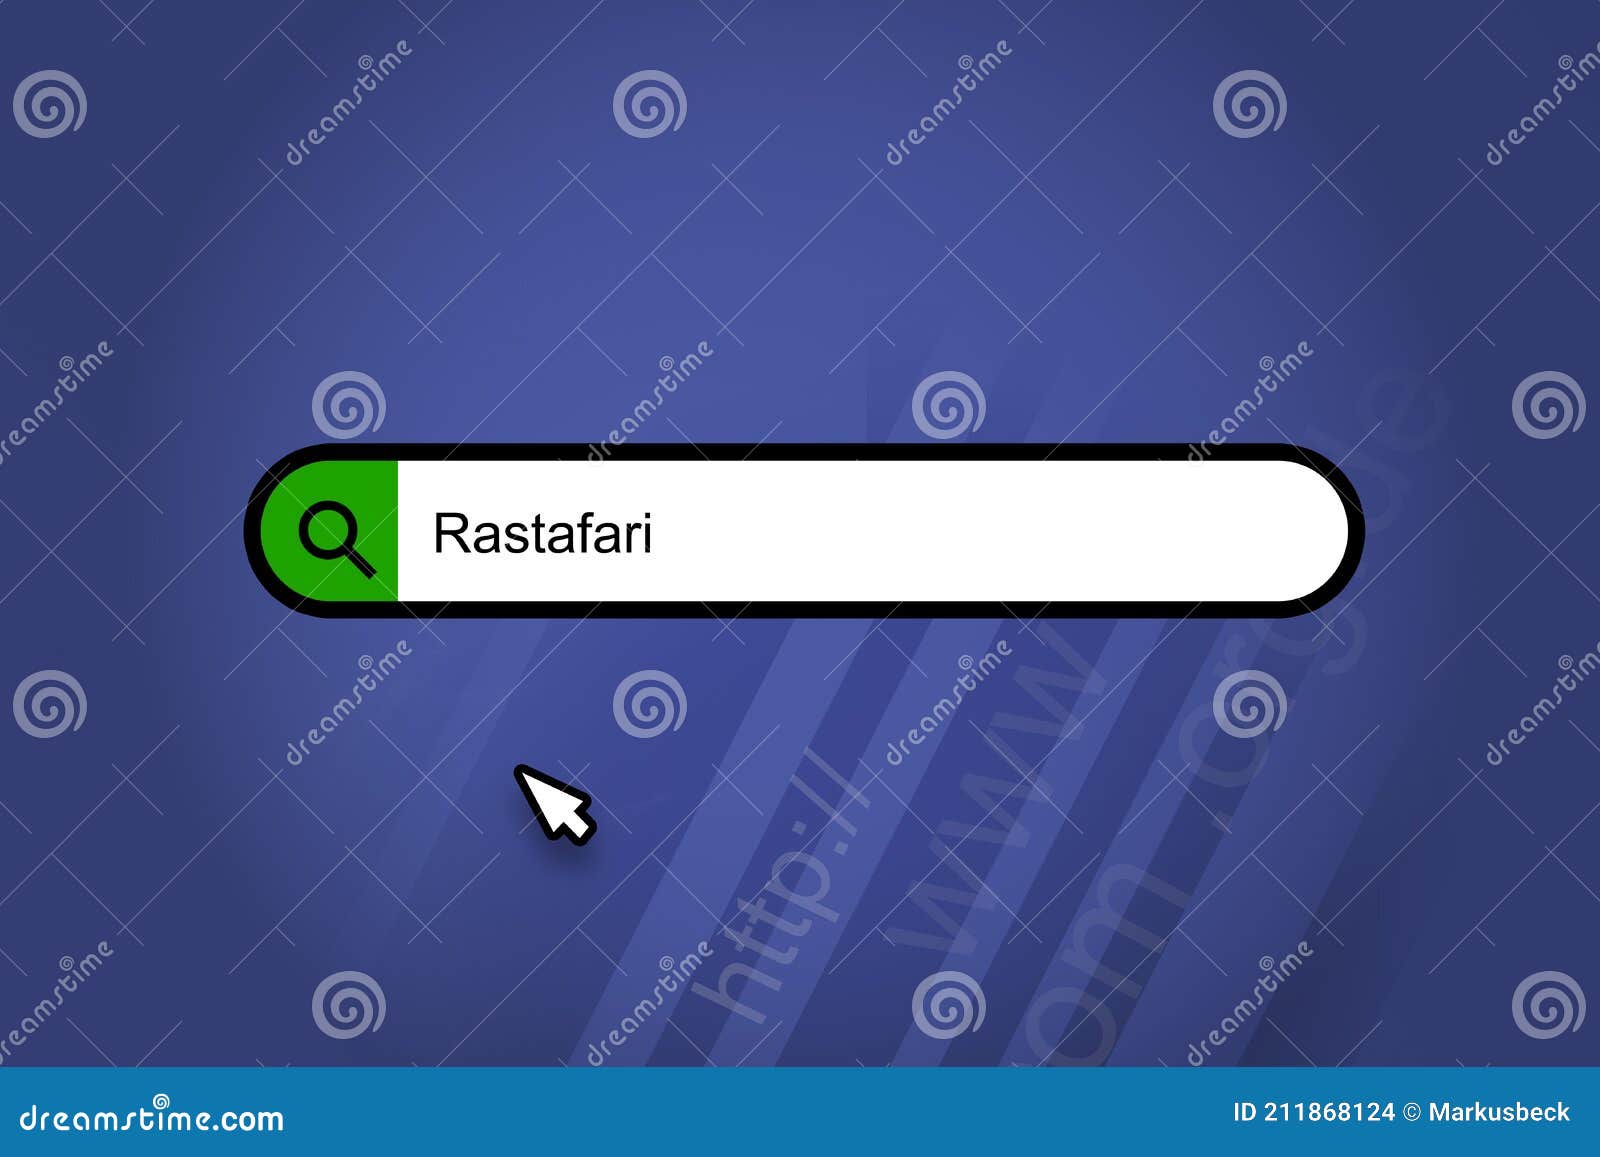 rastafari - search engine, search bar with blue background